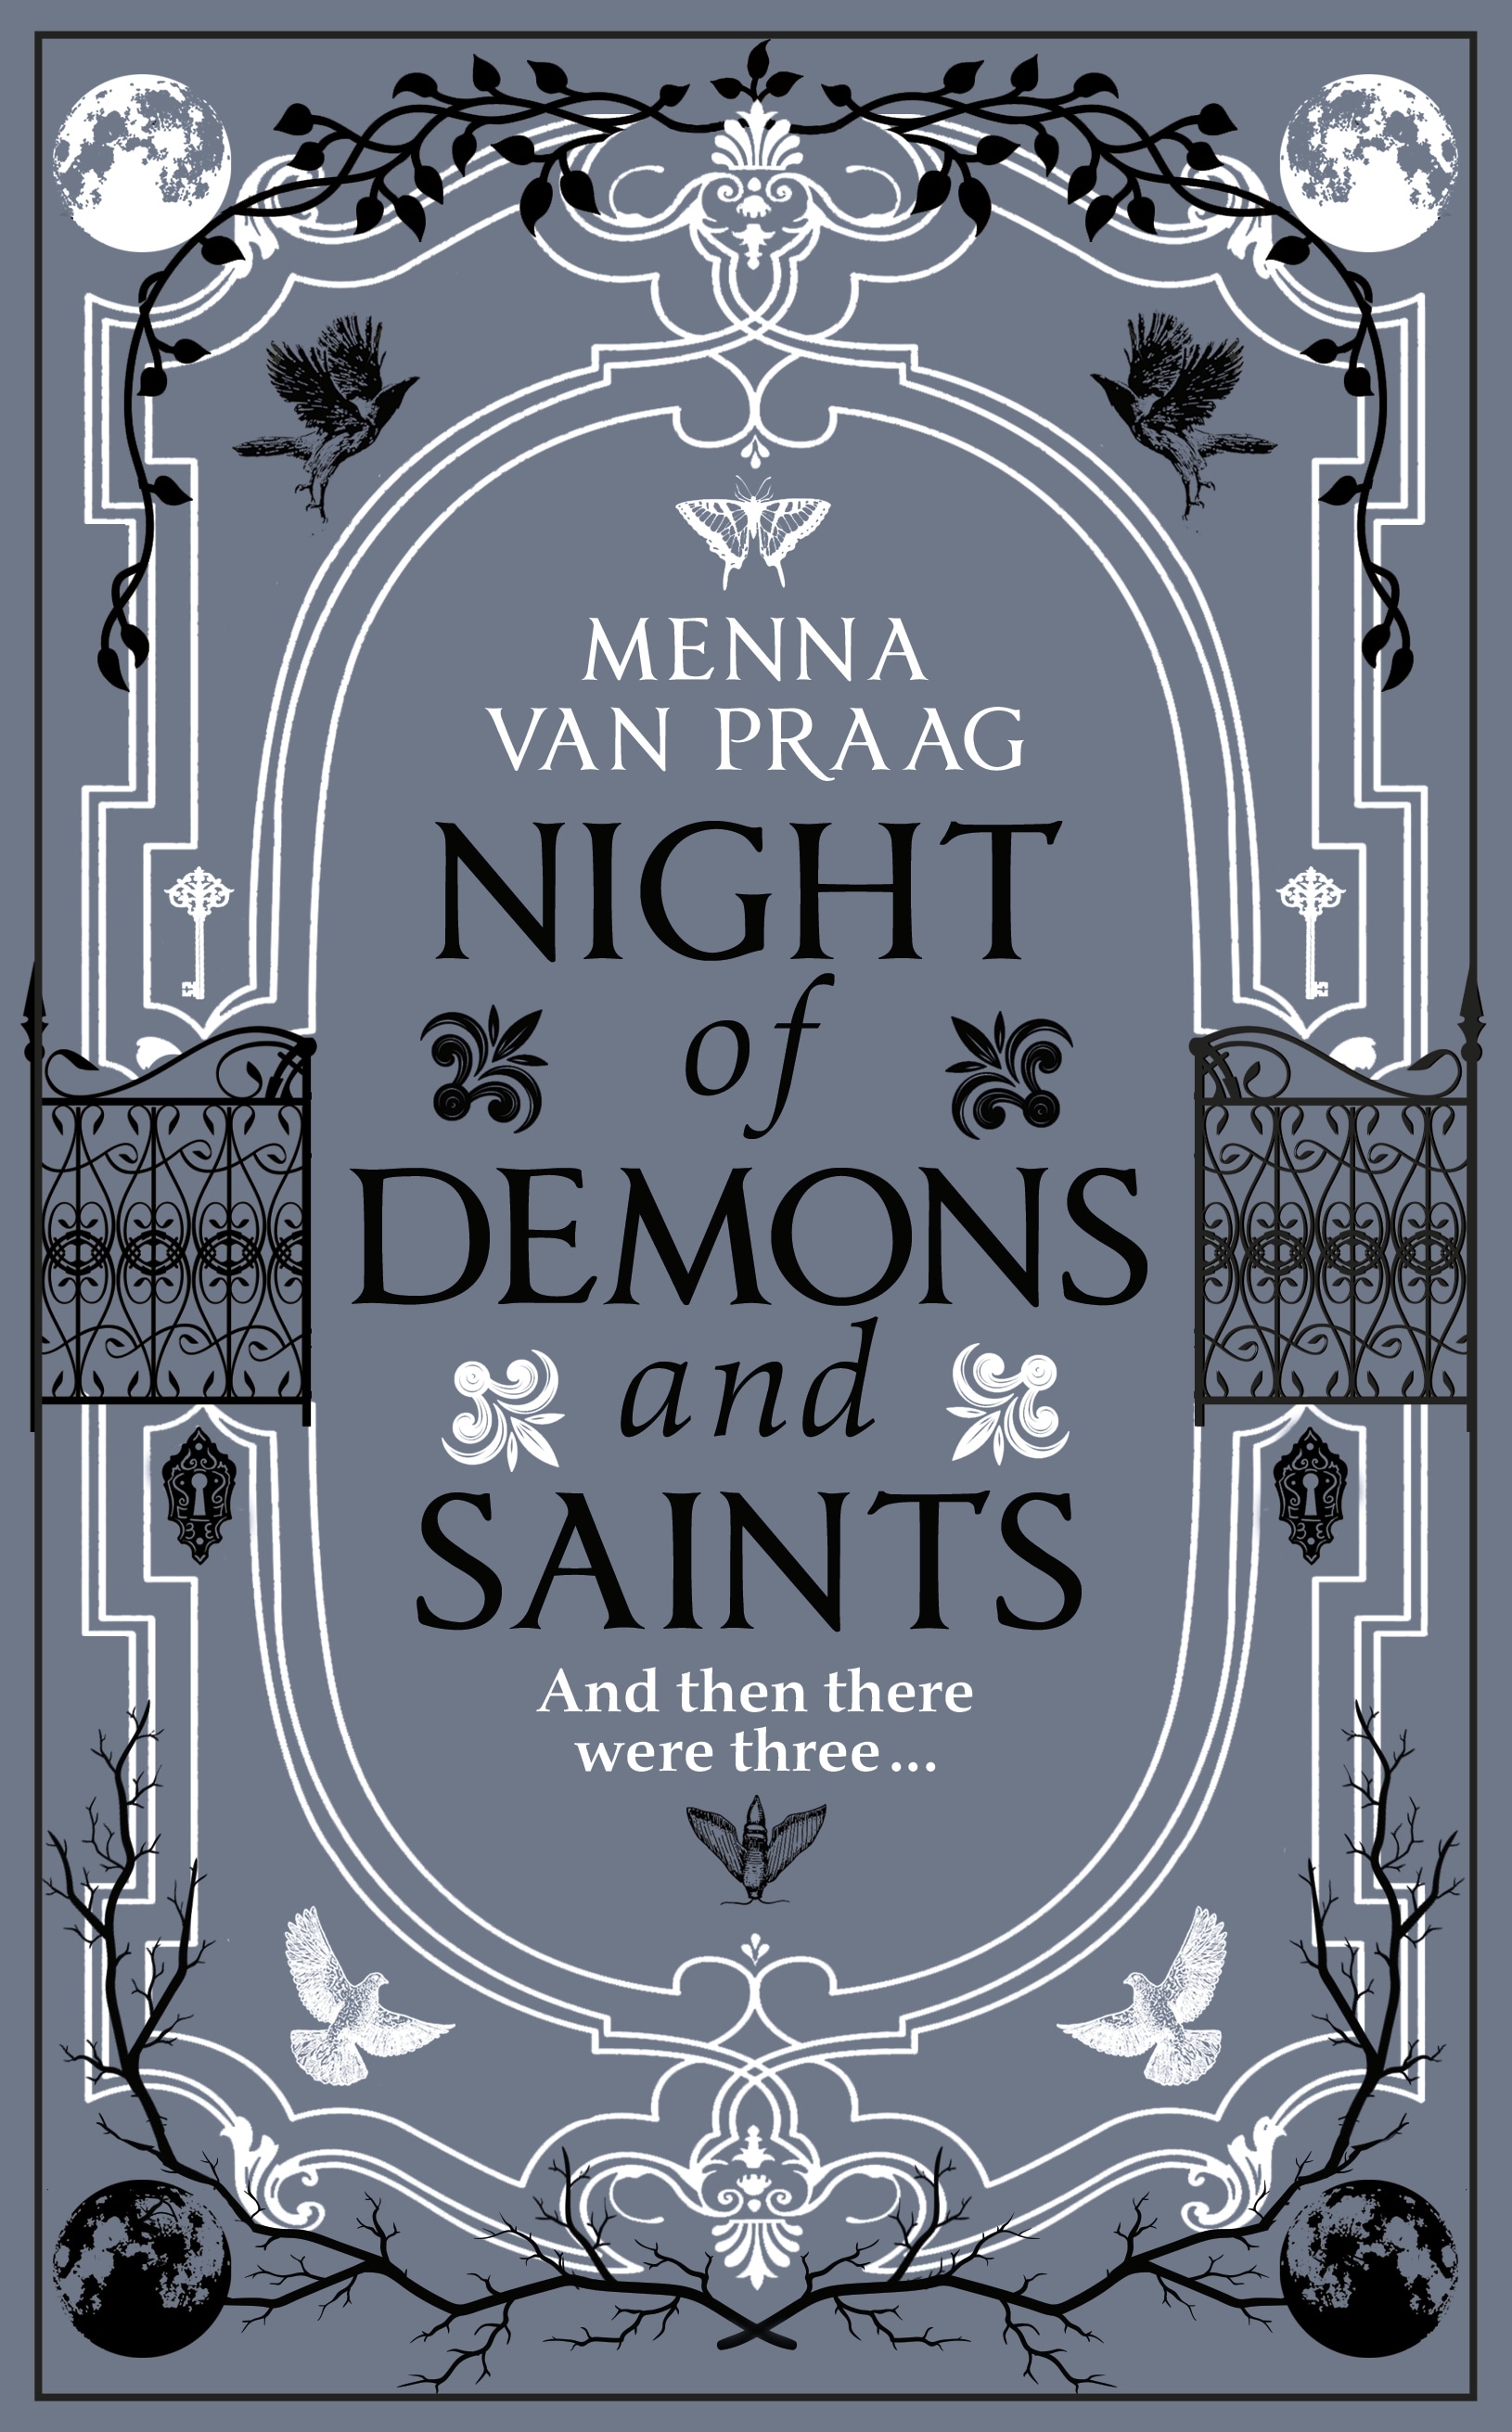 Book “Night of Demons and Saints” by Menna van Praag — February 3, 2022